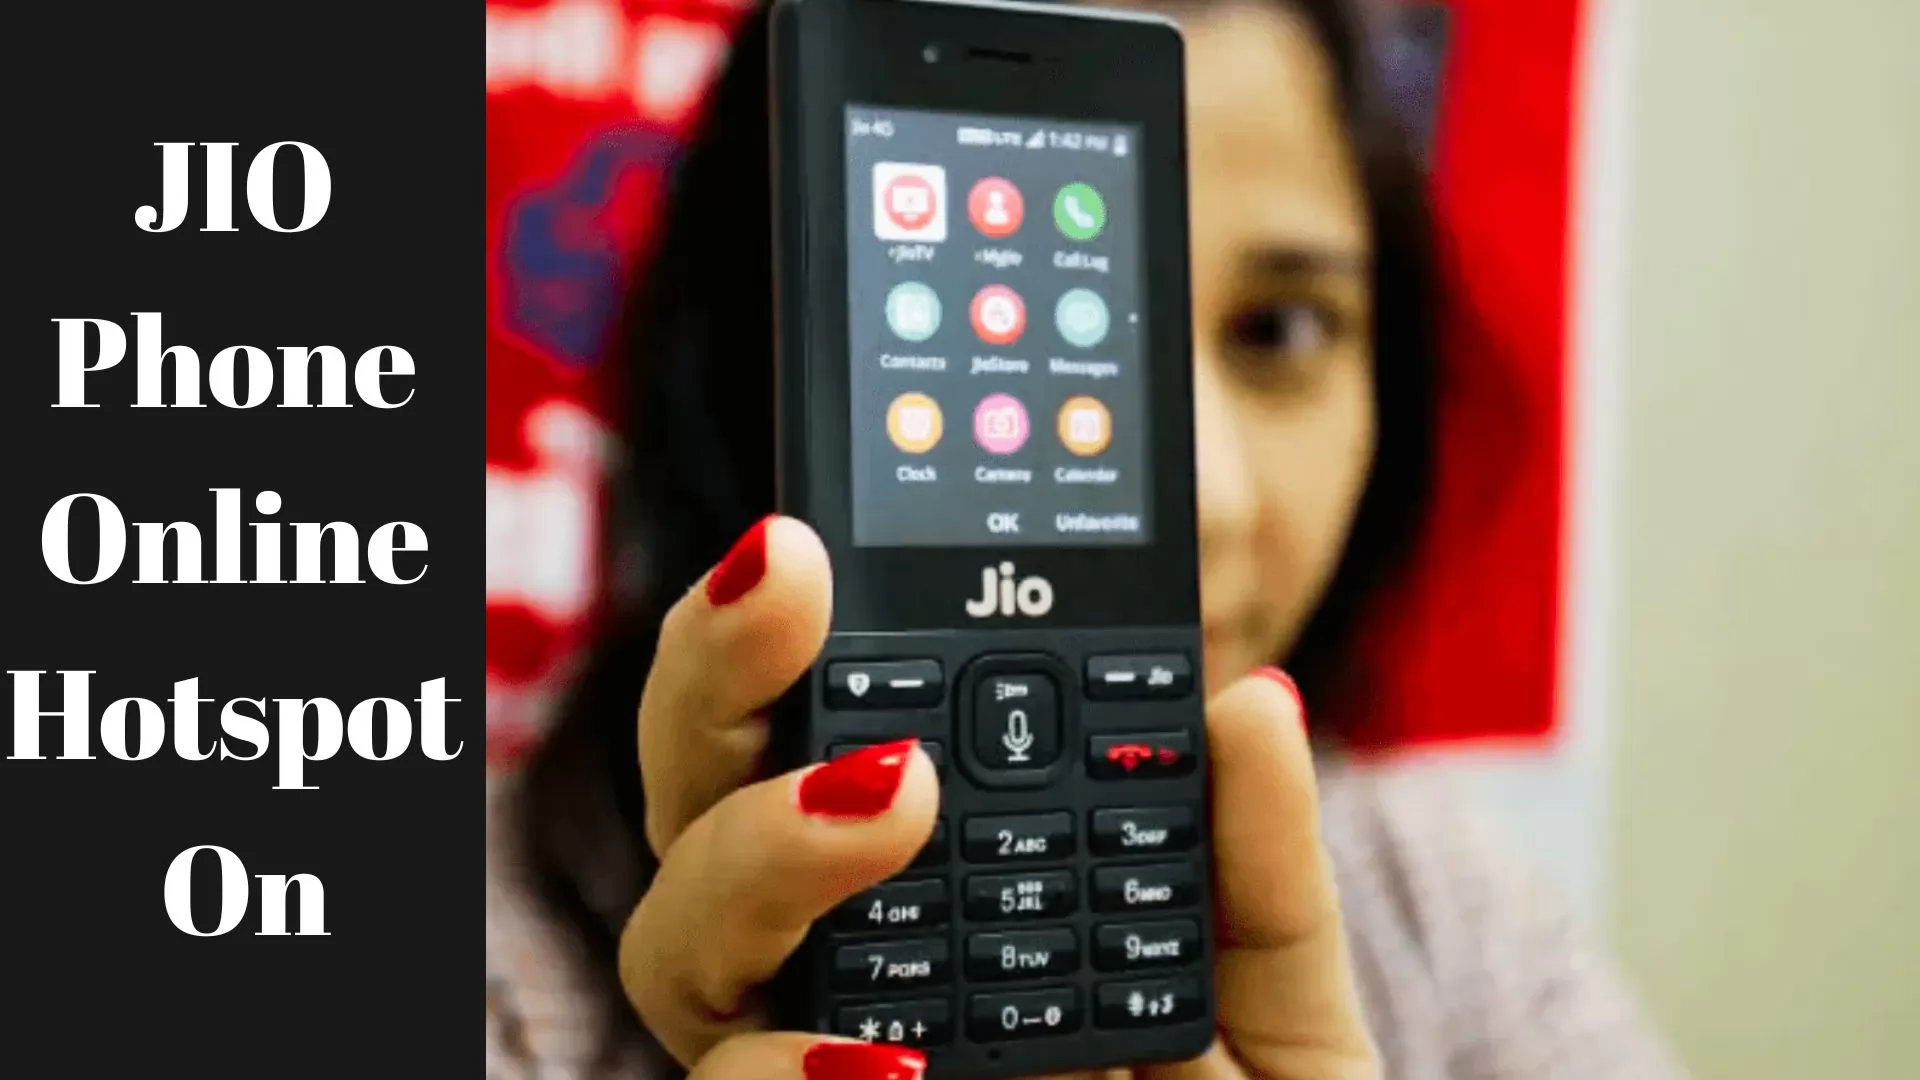 JIO Phone Online Hotspot On